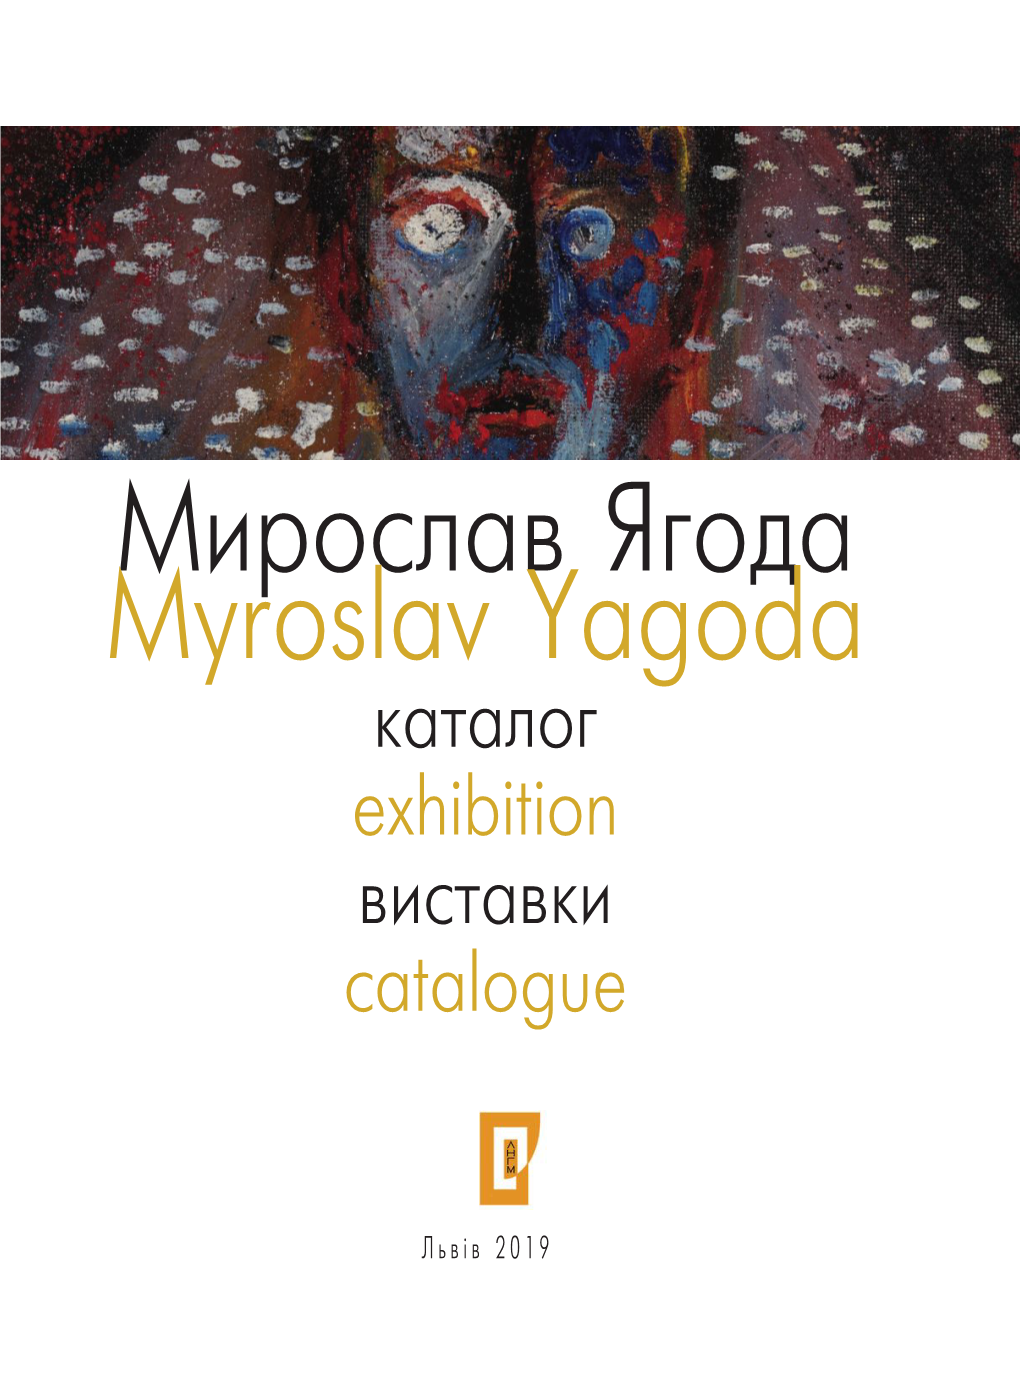 Мирослав Ягода Myroslav Yagoda Каталог Exhibition Виставки Catalogue